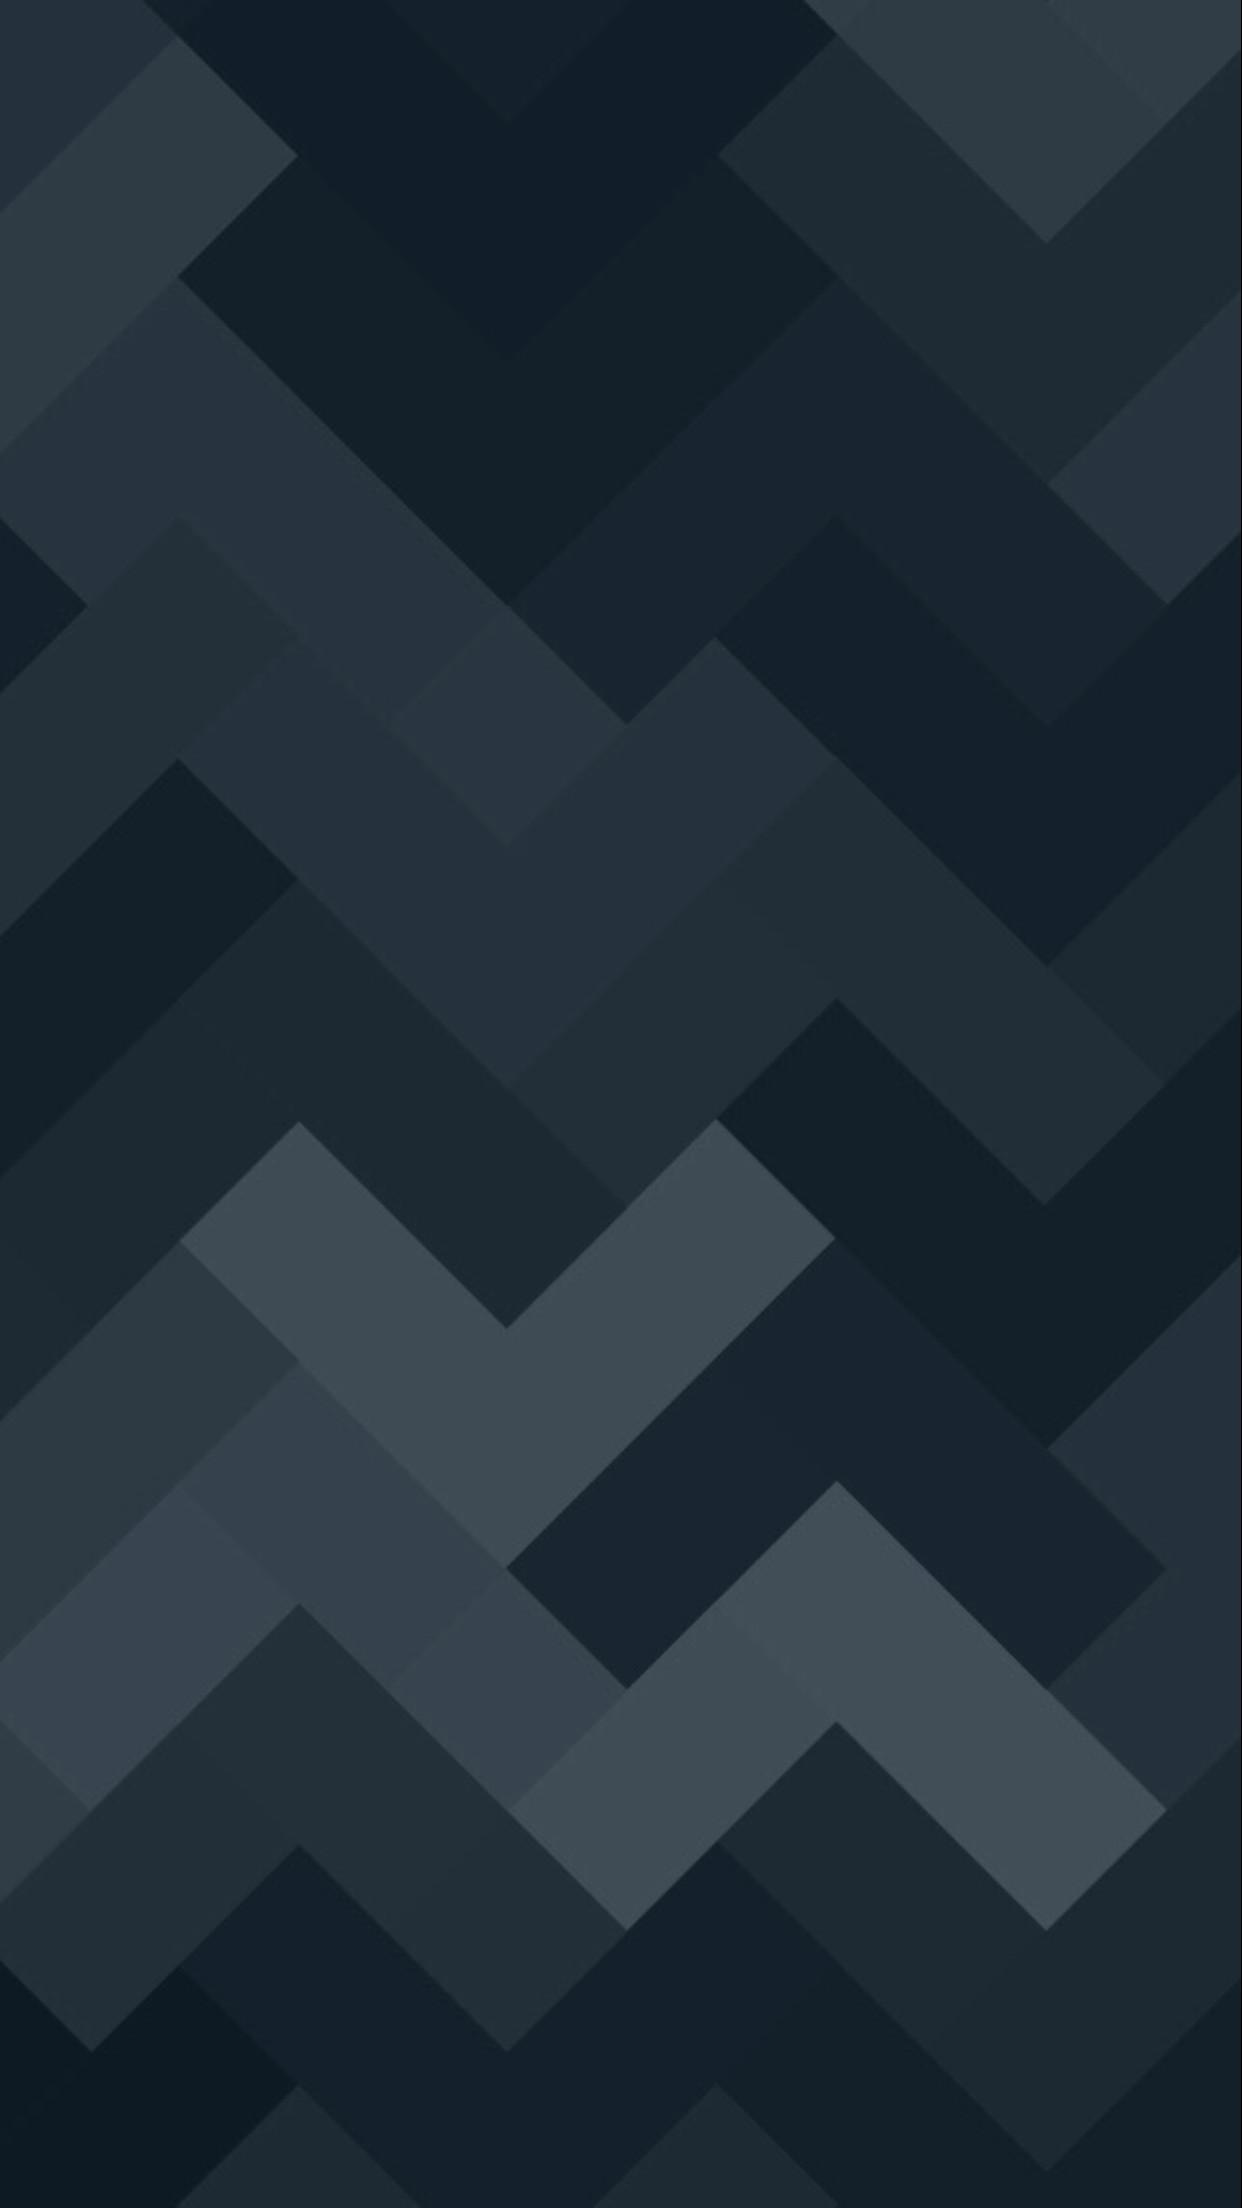 Best Geometry iPhone HD Wallpapers  iLikeWallpaper